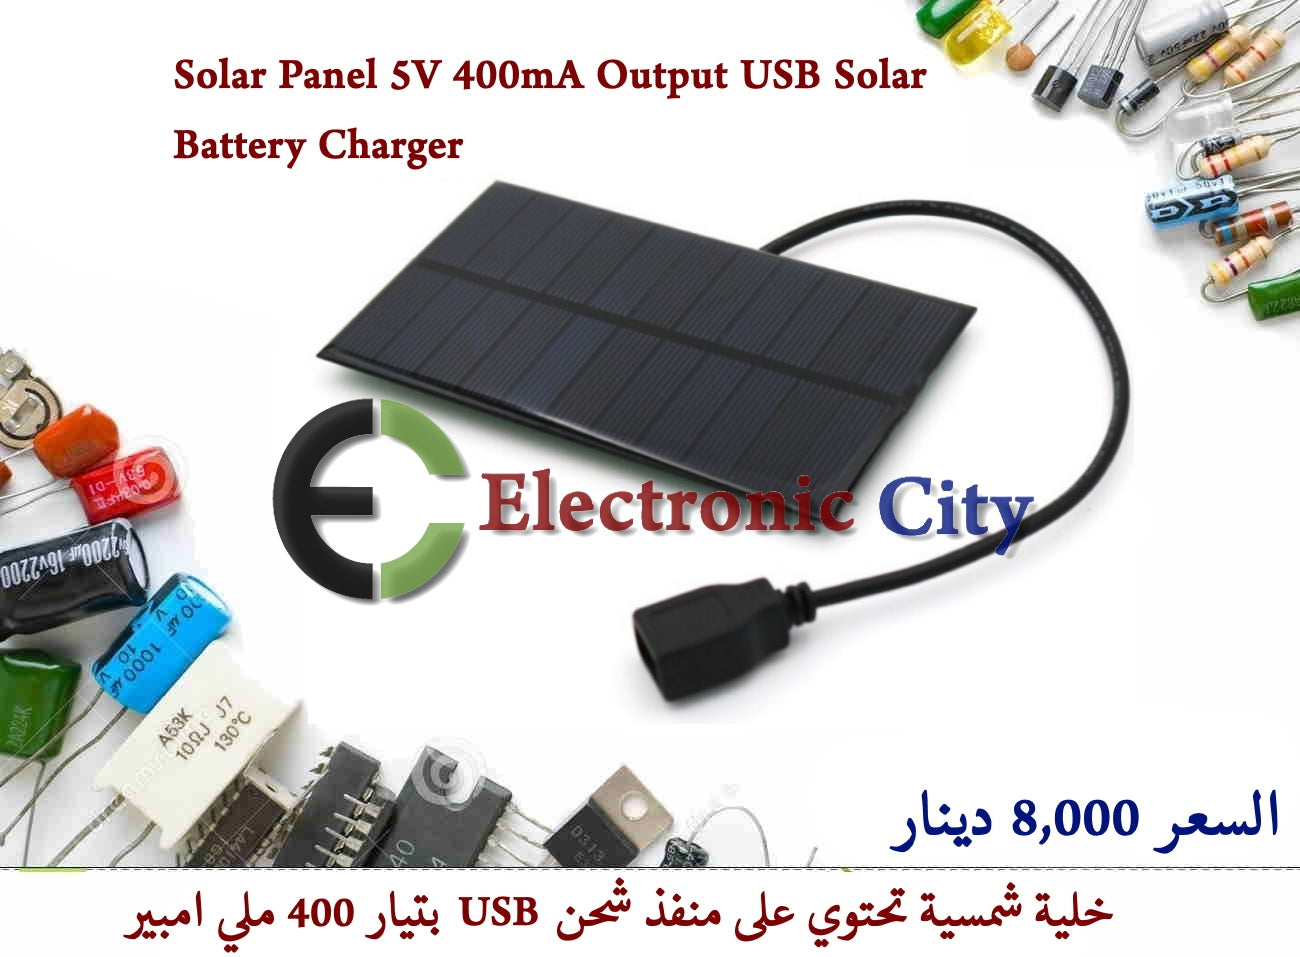 Solar Panel 5V 400mA Output USB Solar Battery Charger